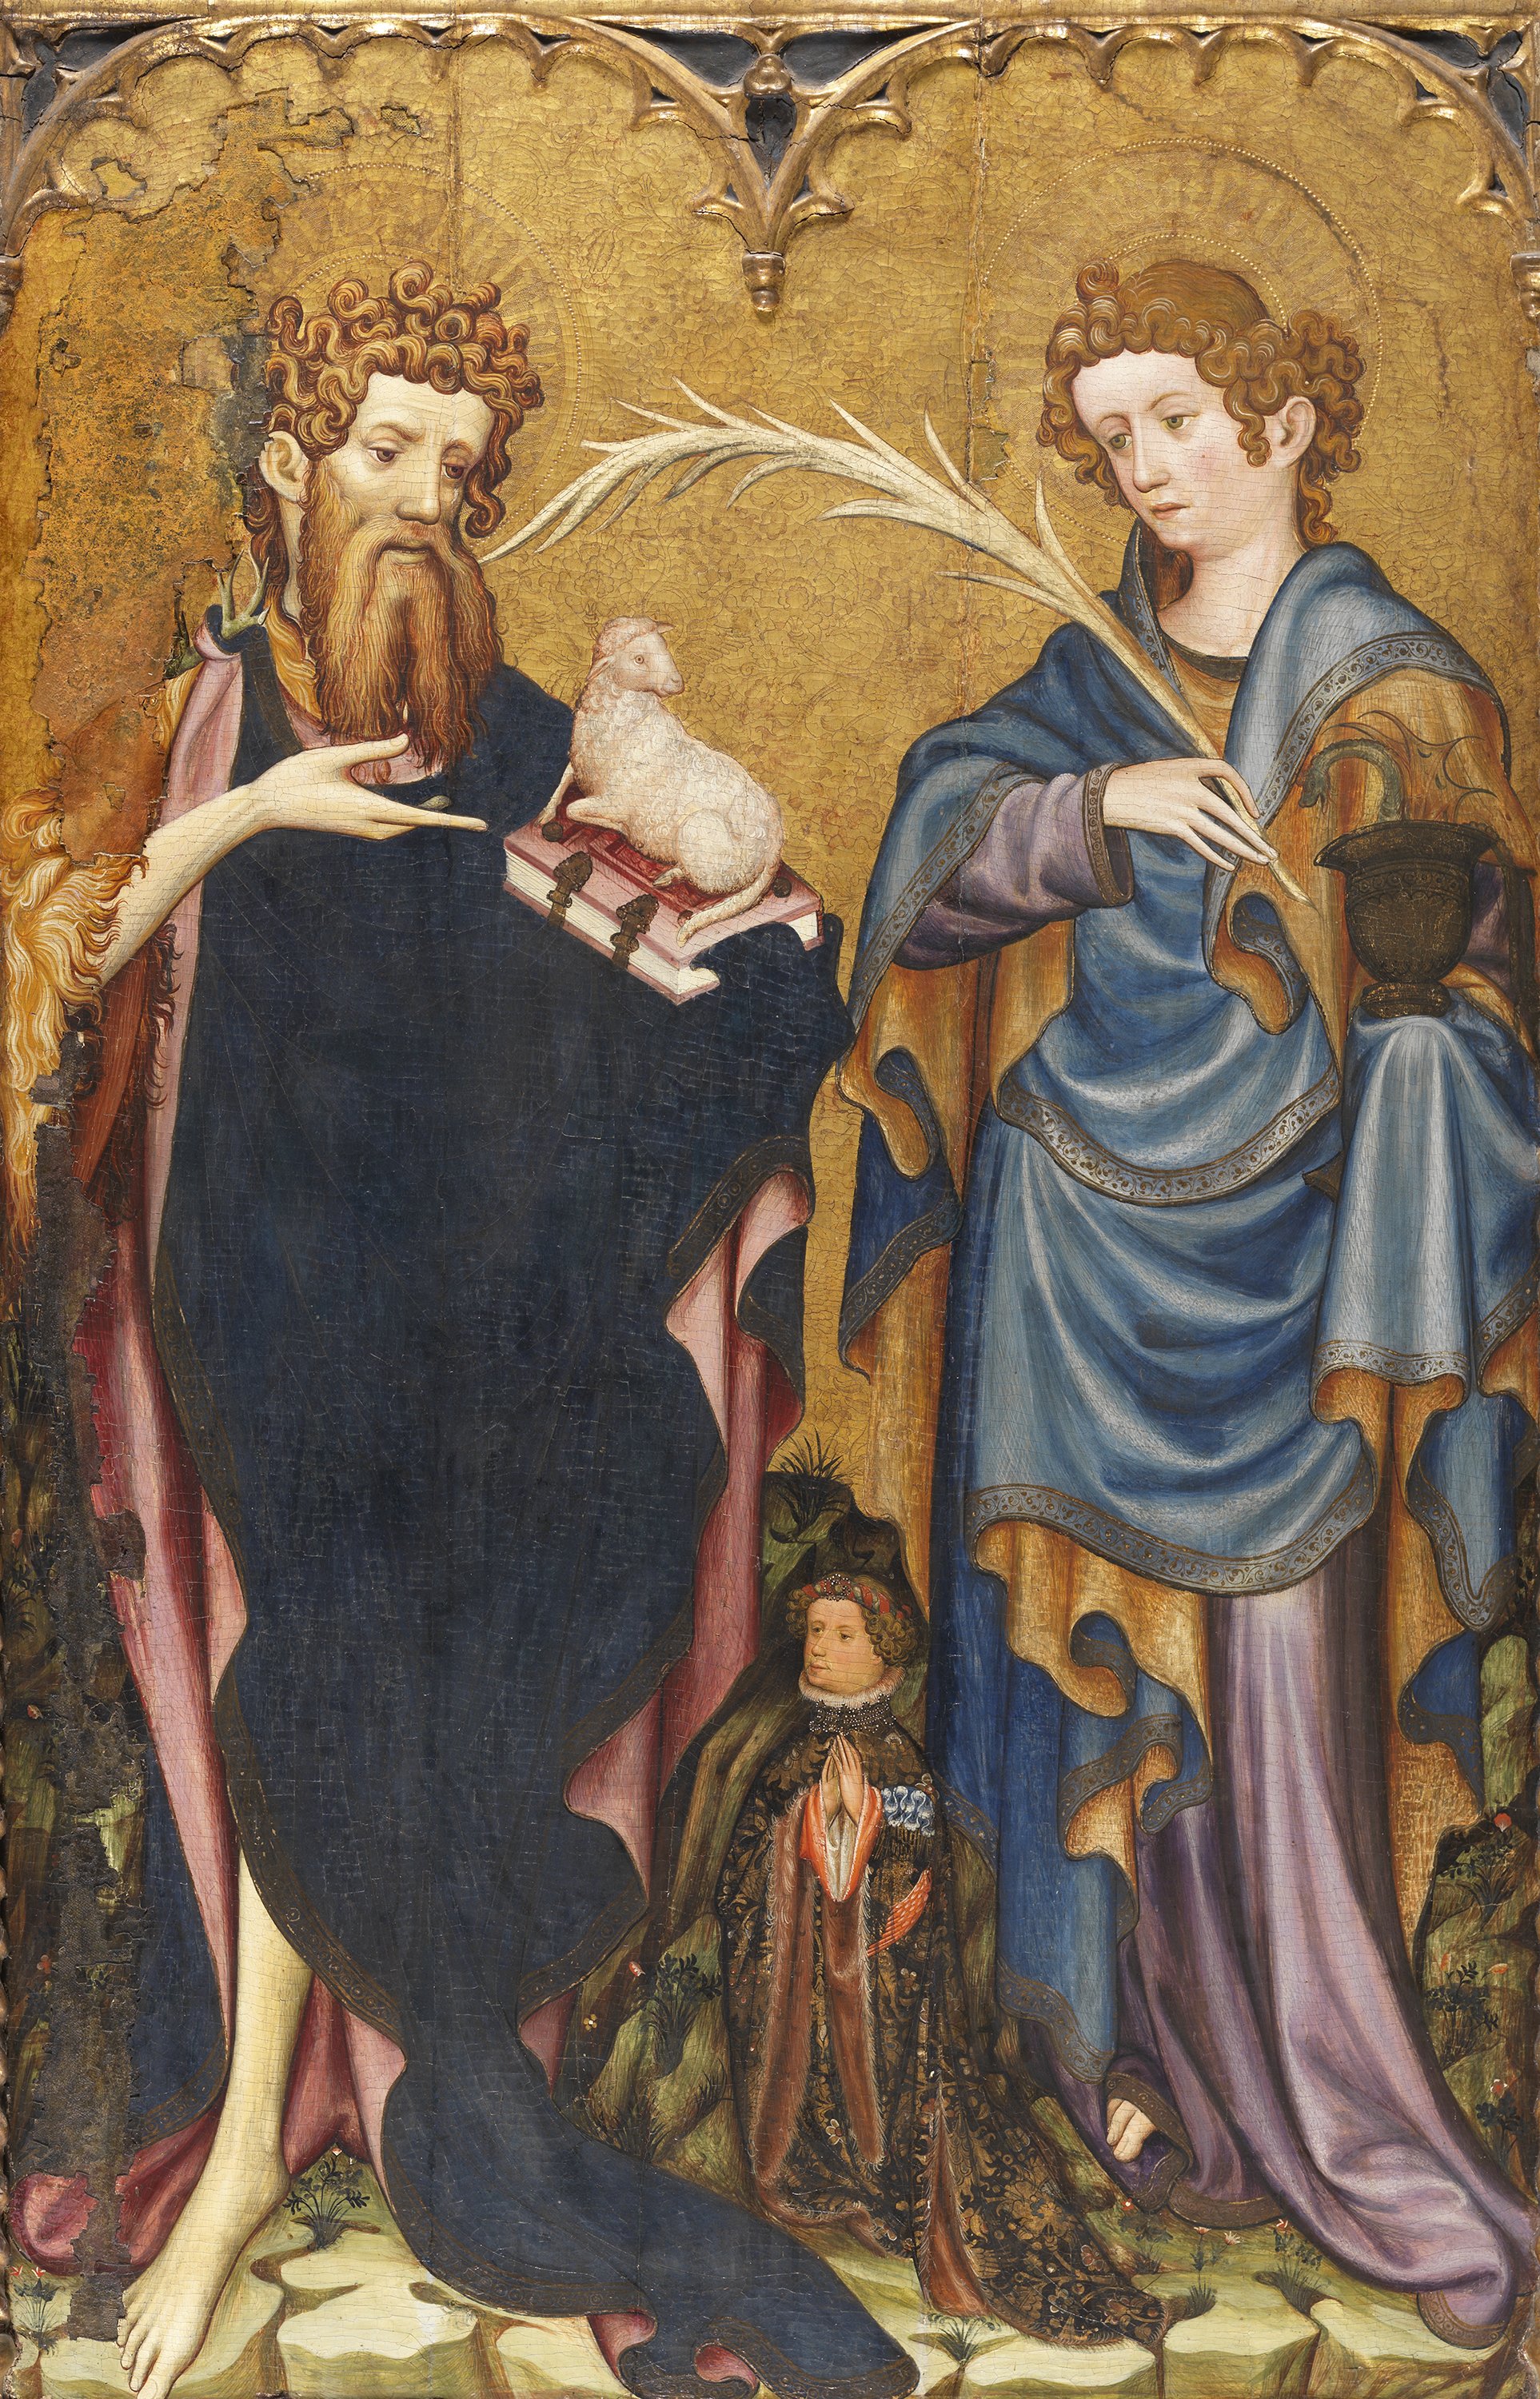 Saint John the Baptist and Saint John the Evangelist with a Donor. Los santos Juanes con un donante, c. 1410